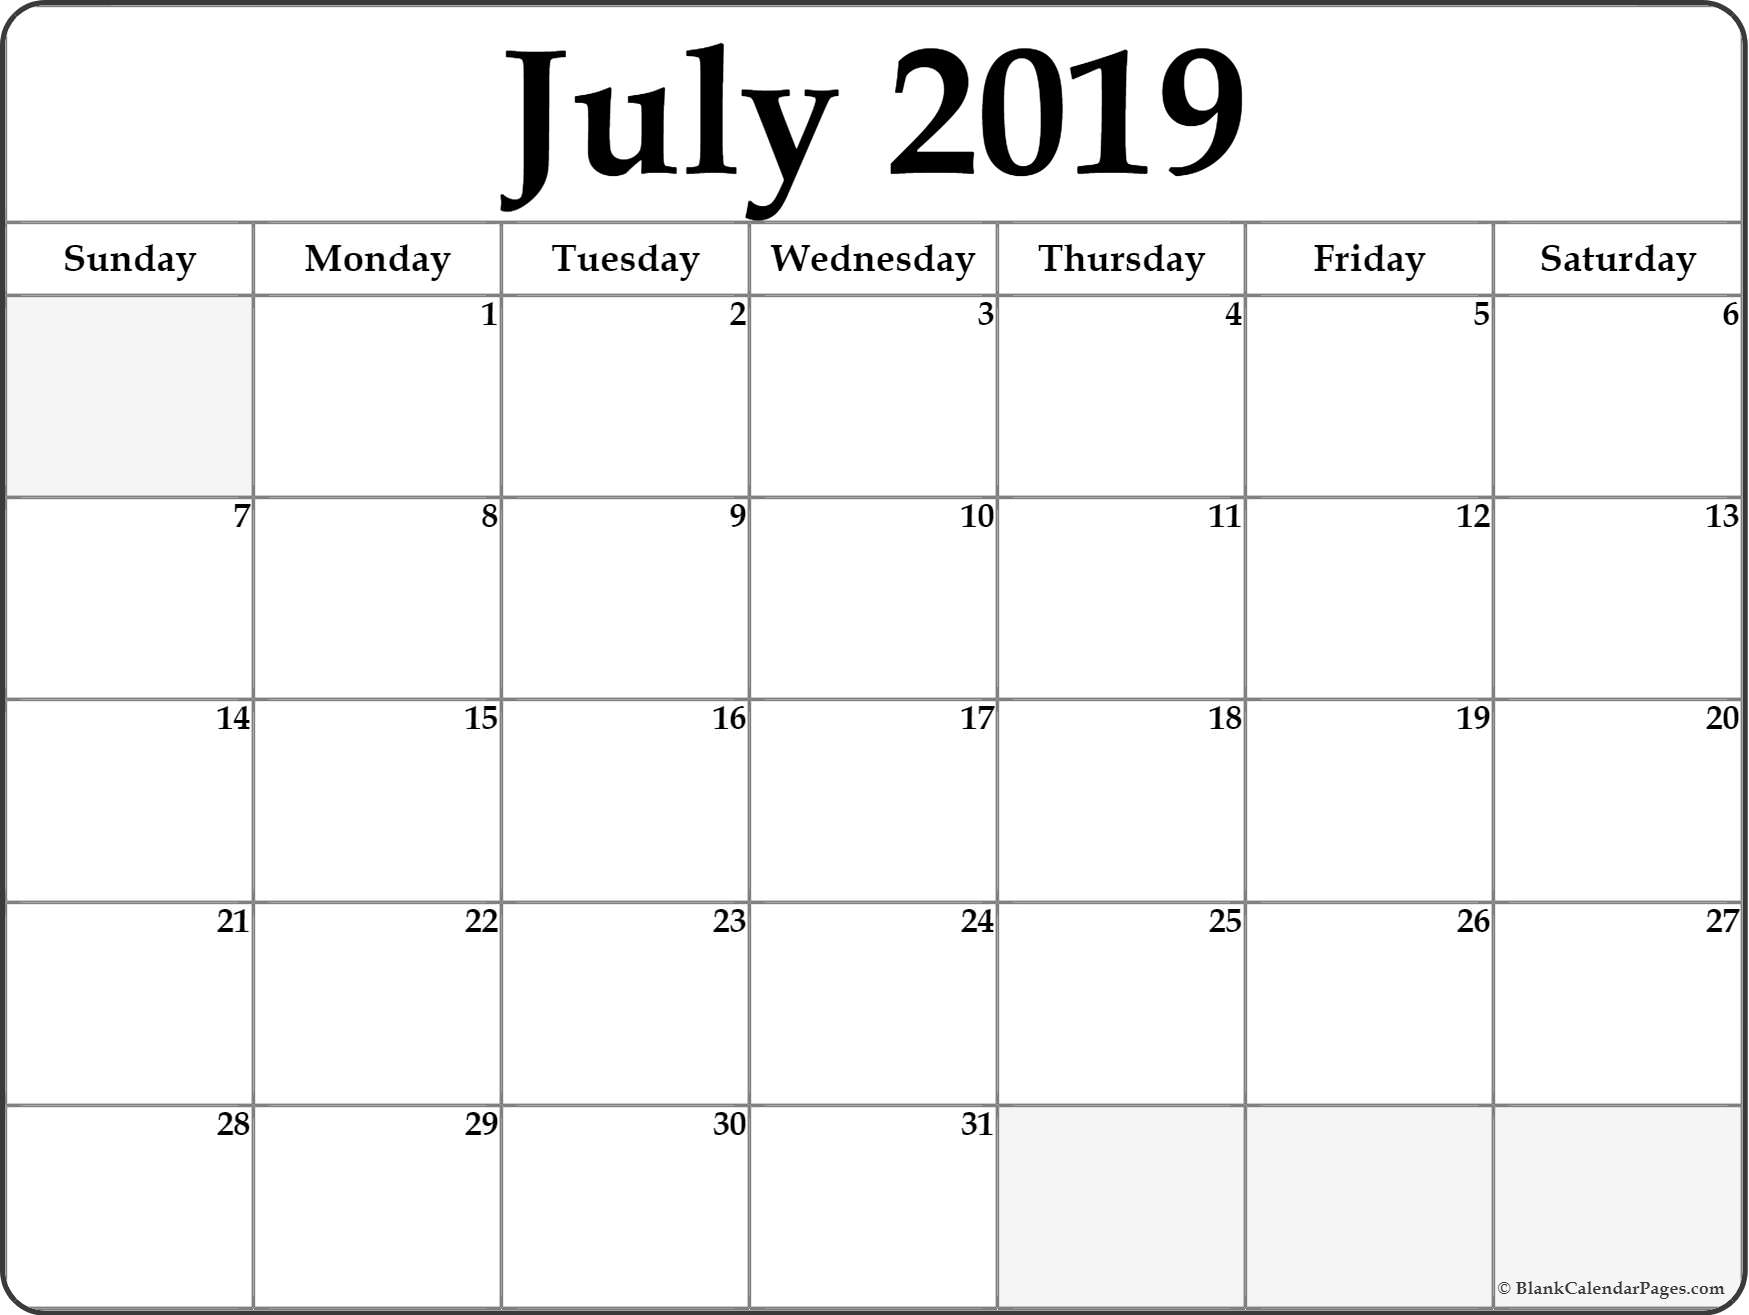 July 2019 Calendar | Free Printable Monthly Calendars